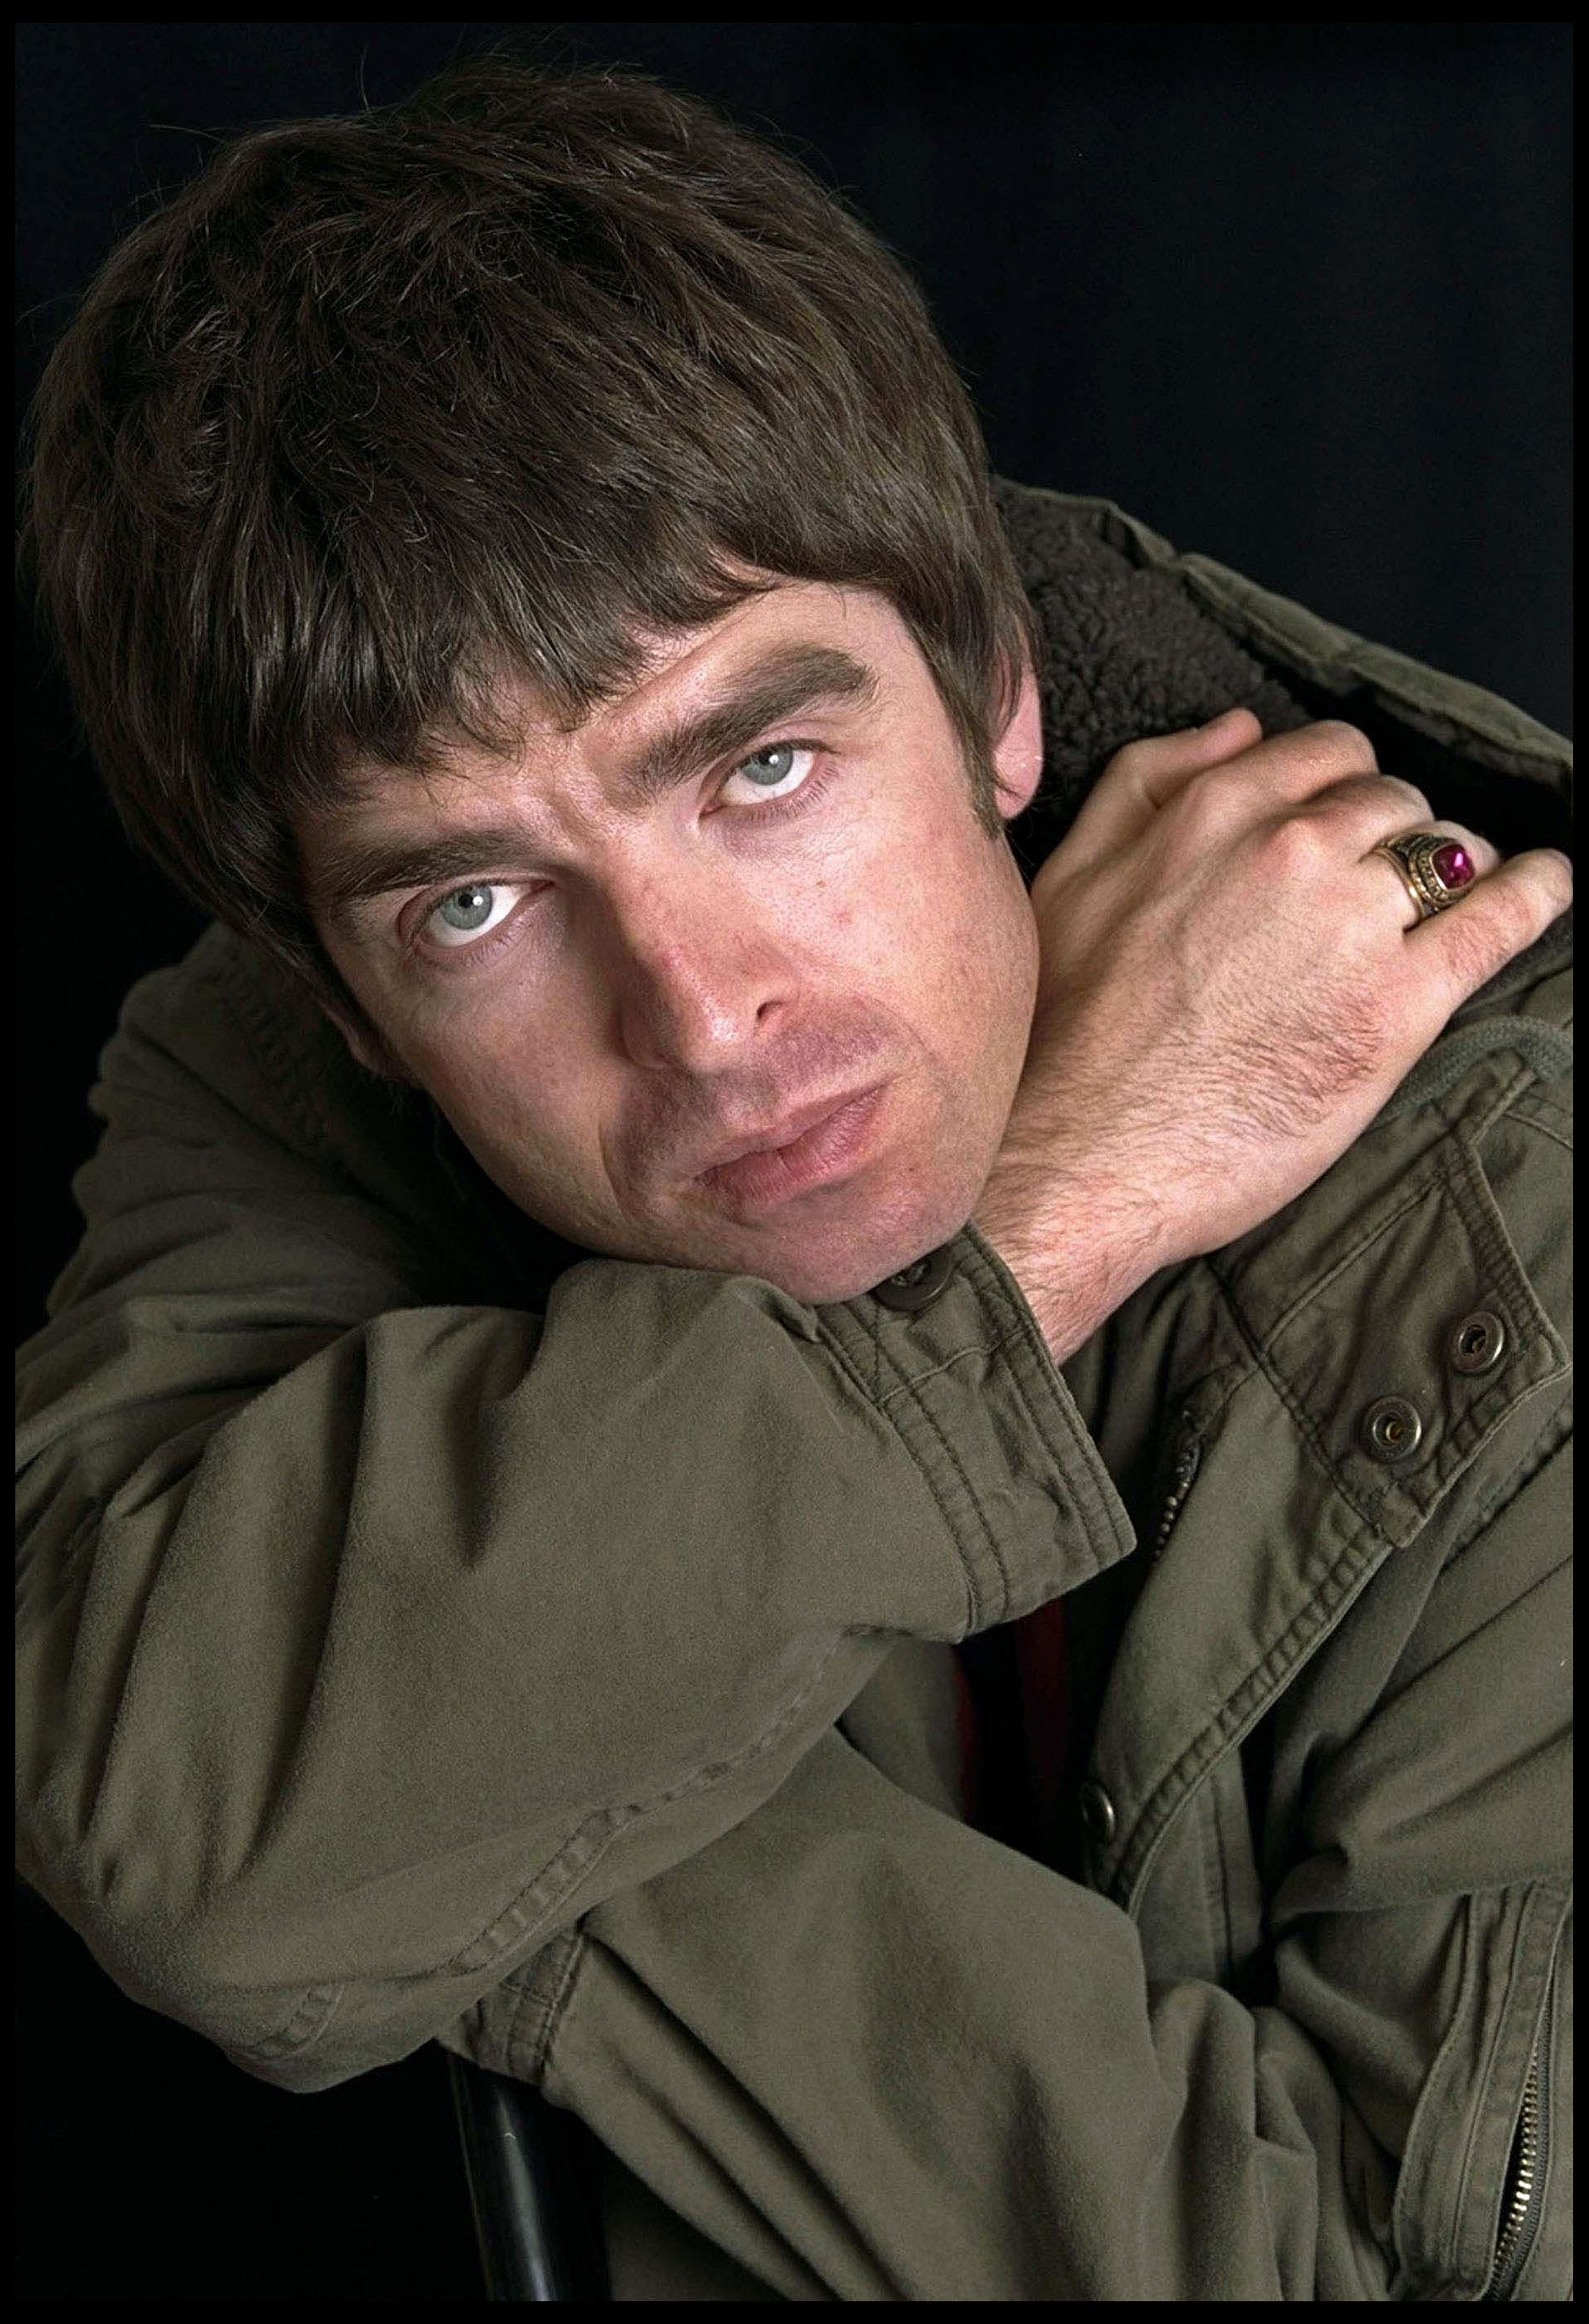 Noel Gallagher, musician